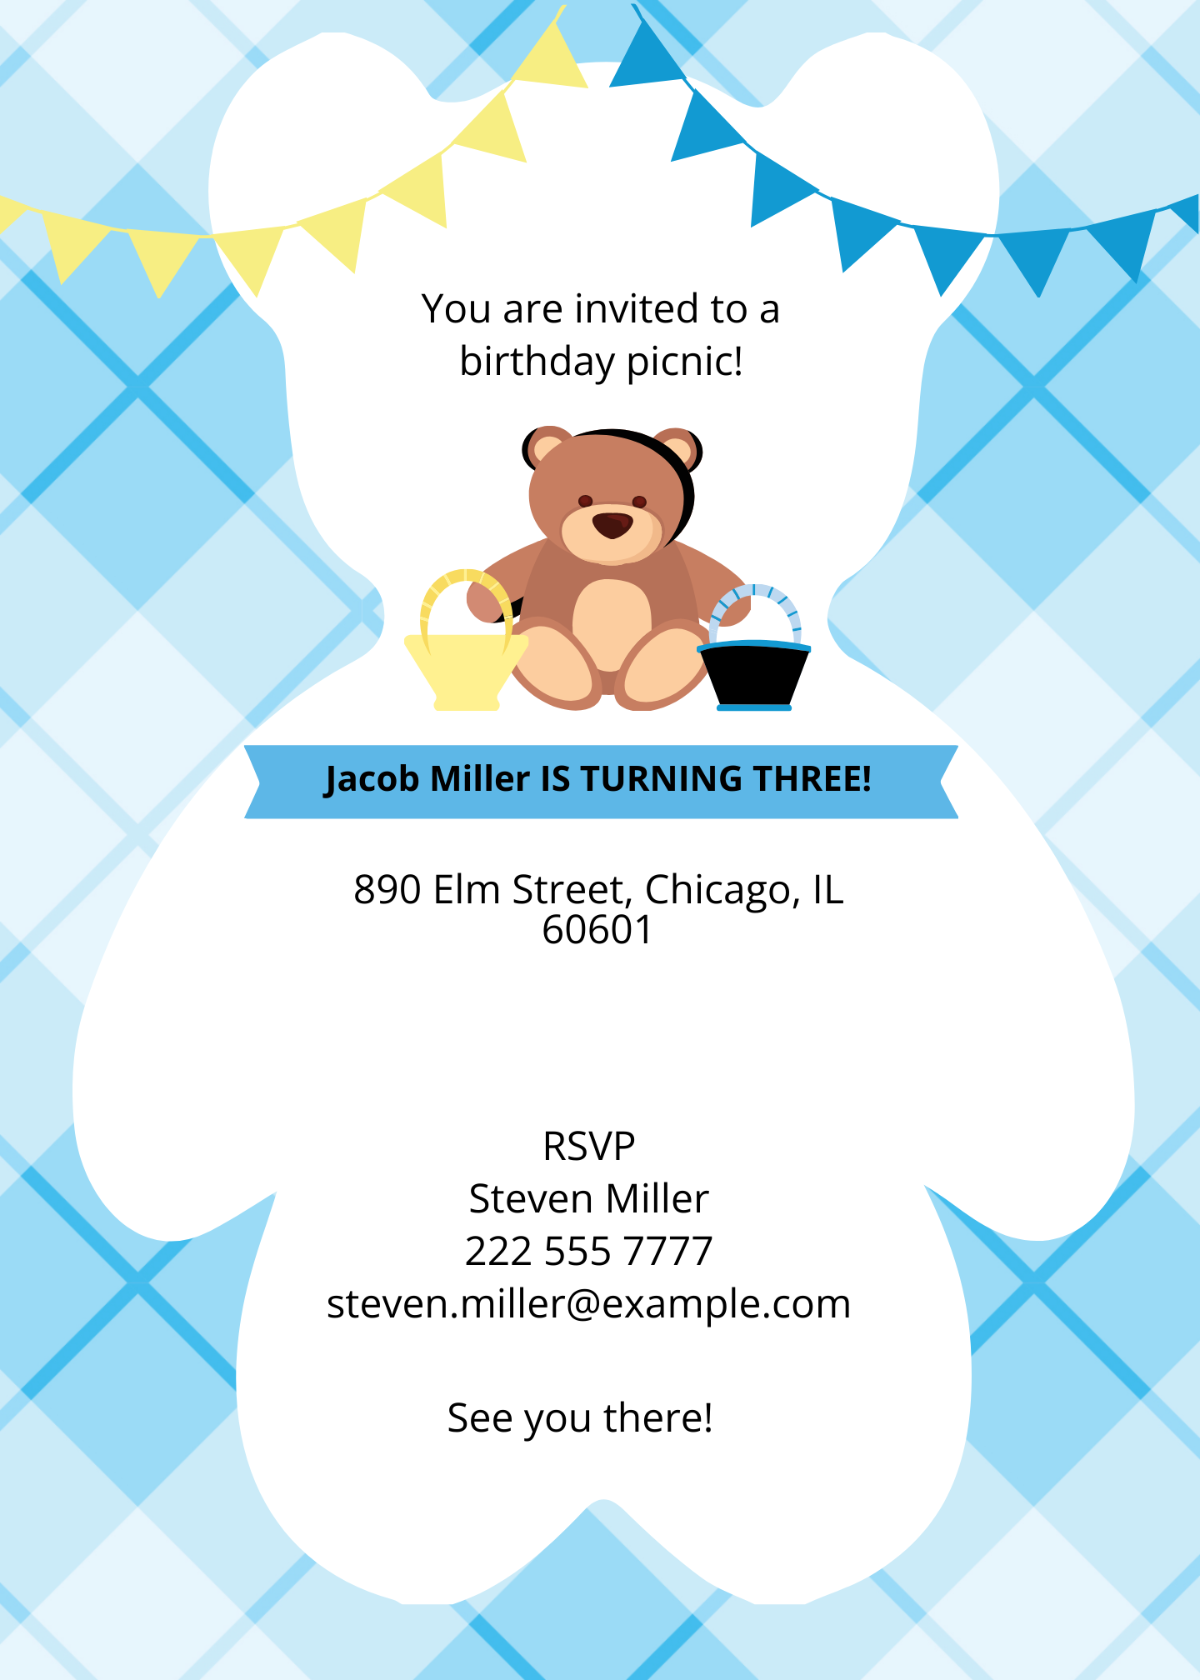 Teddy Bear Picnic Birthday Invitation